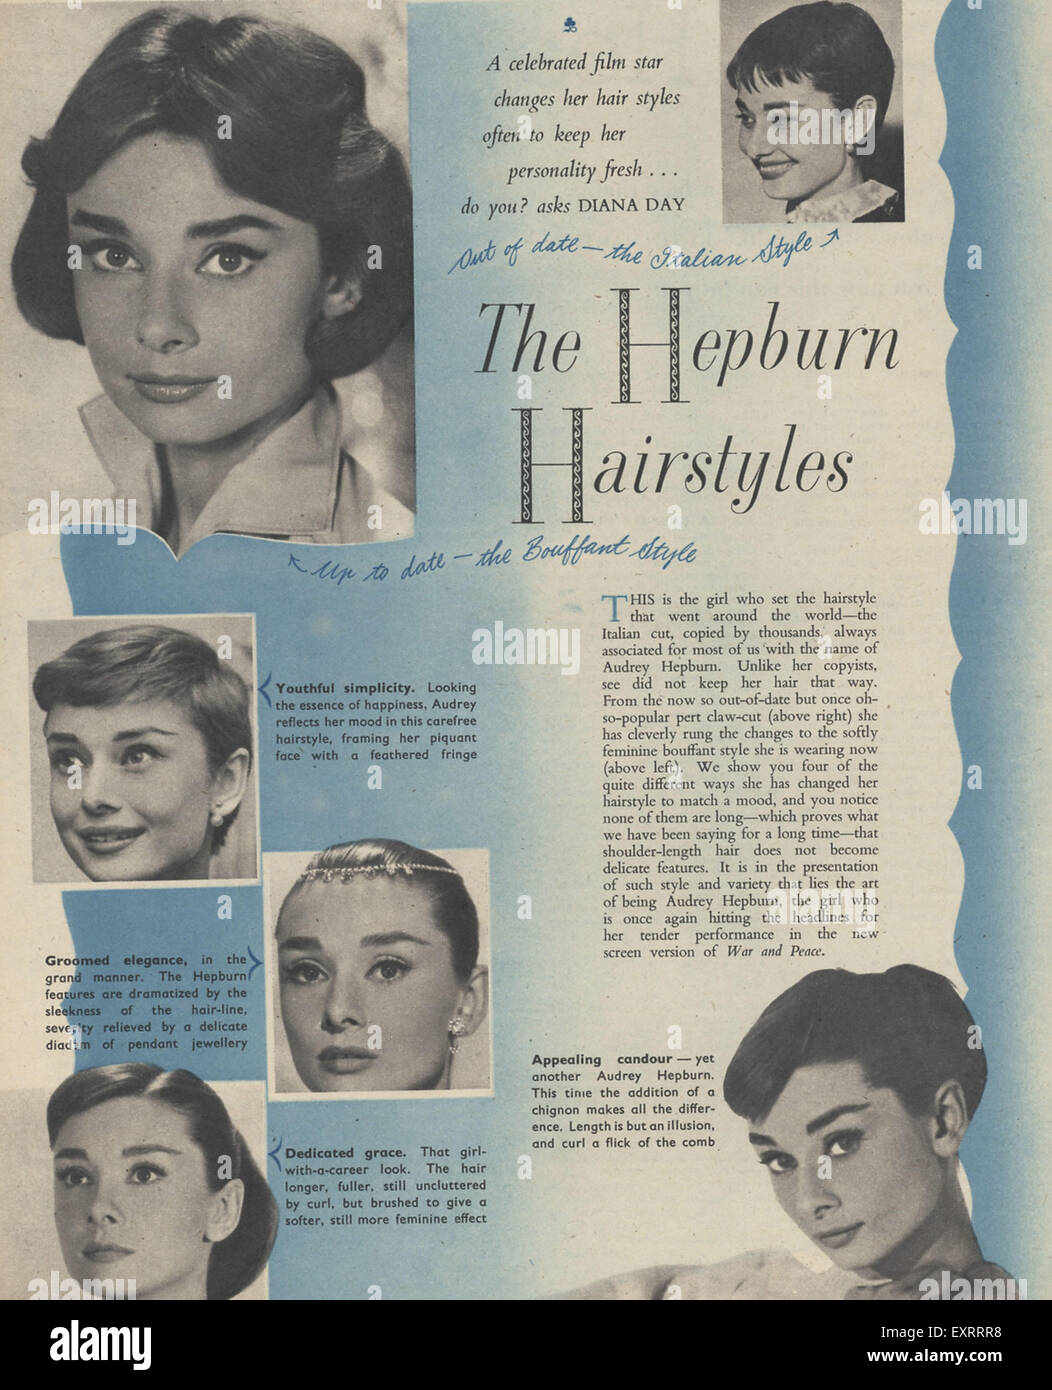 1950s hair tutorial